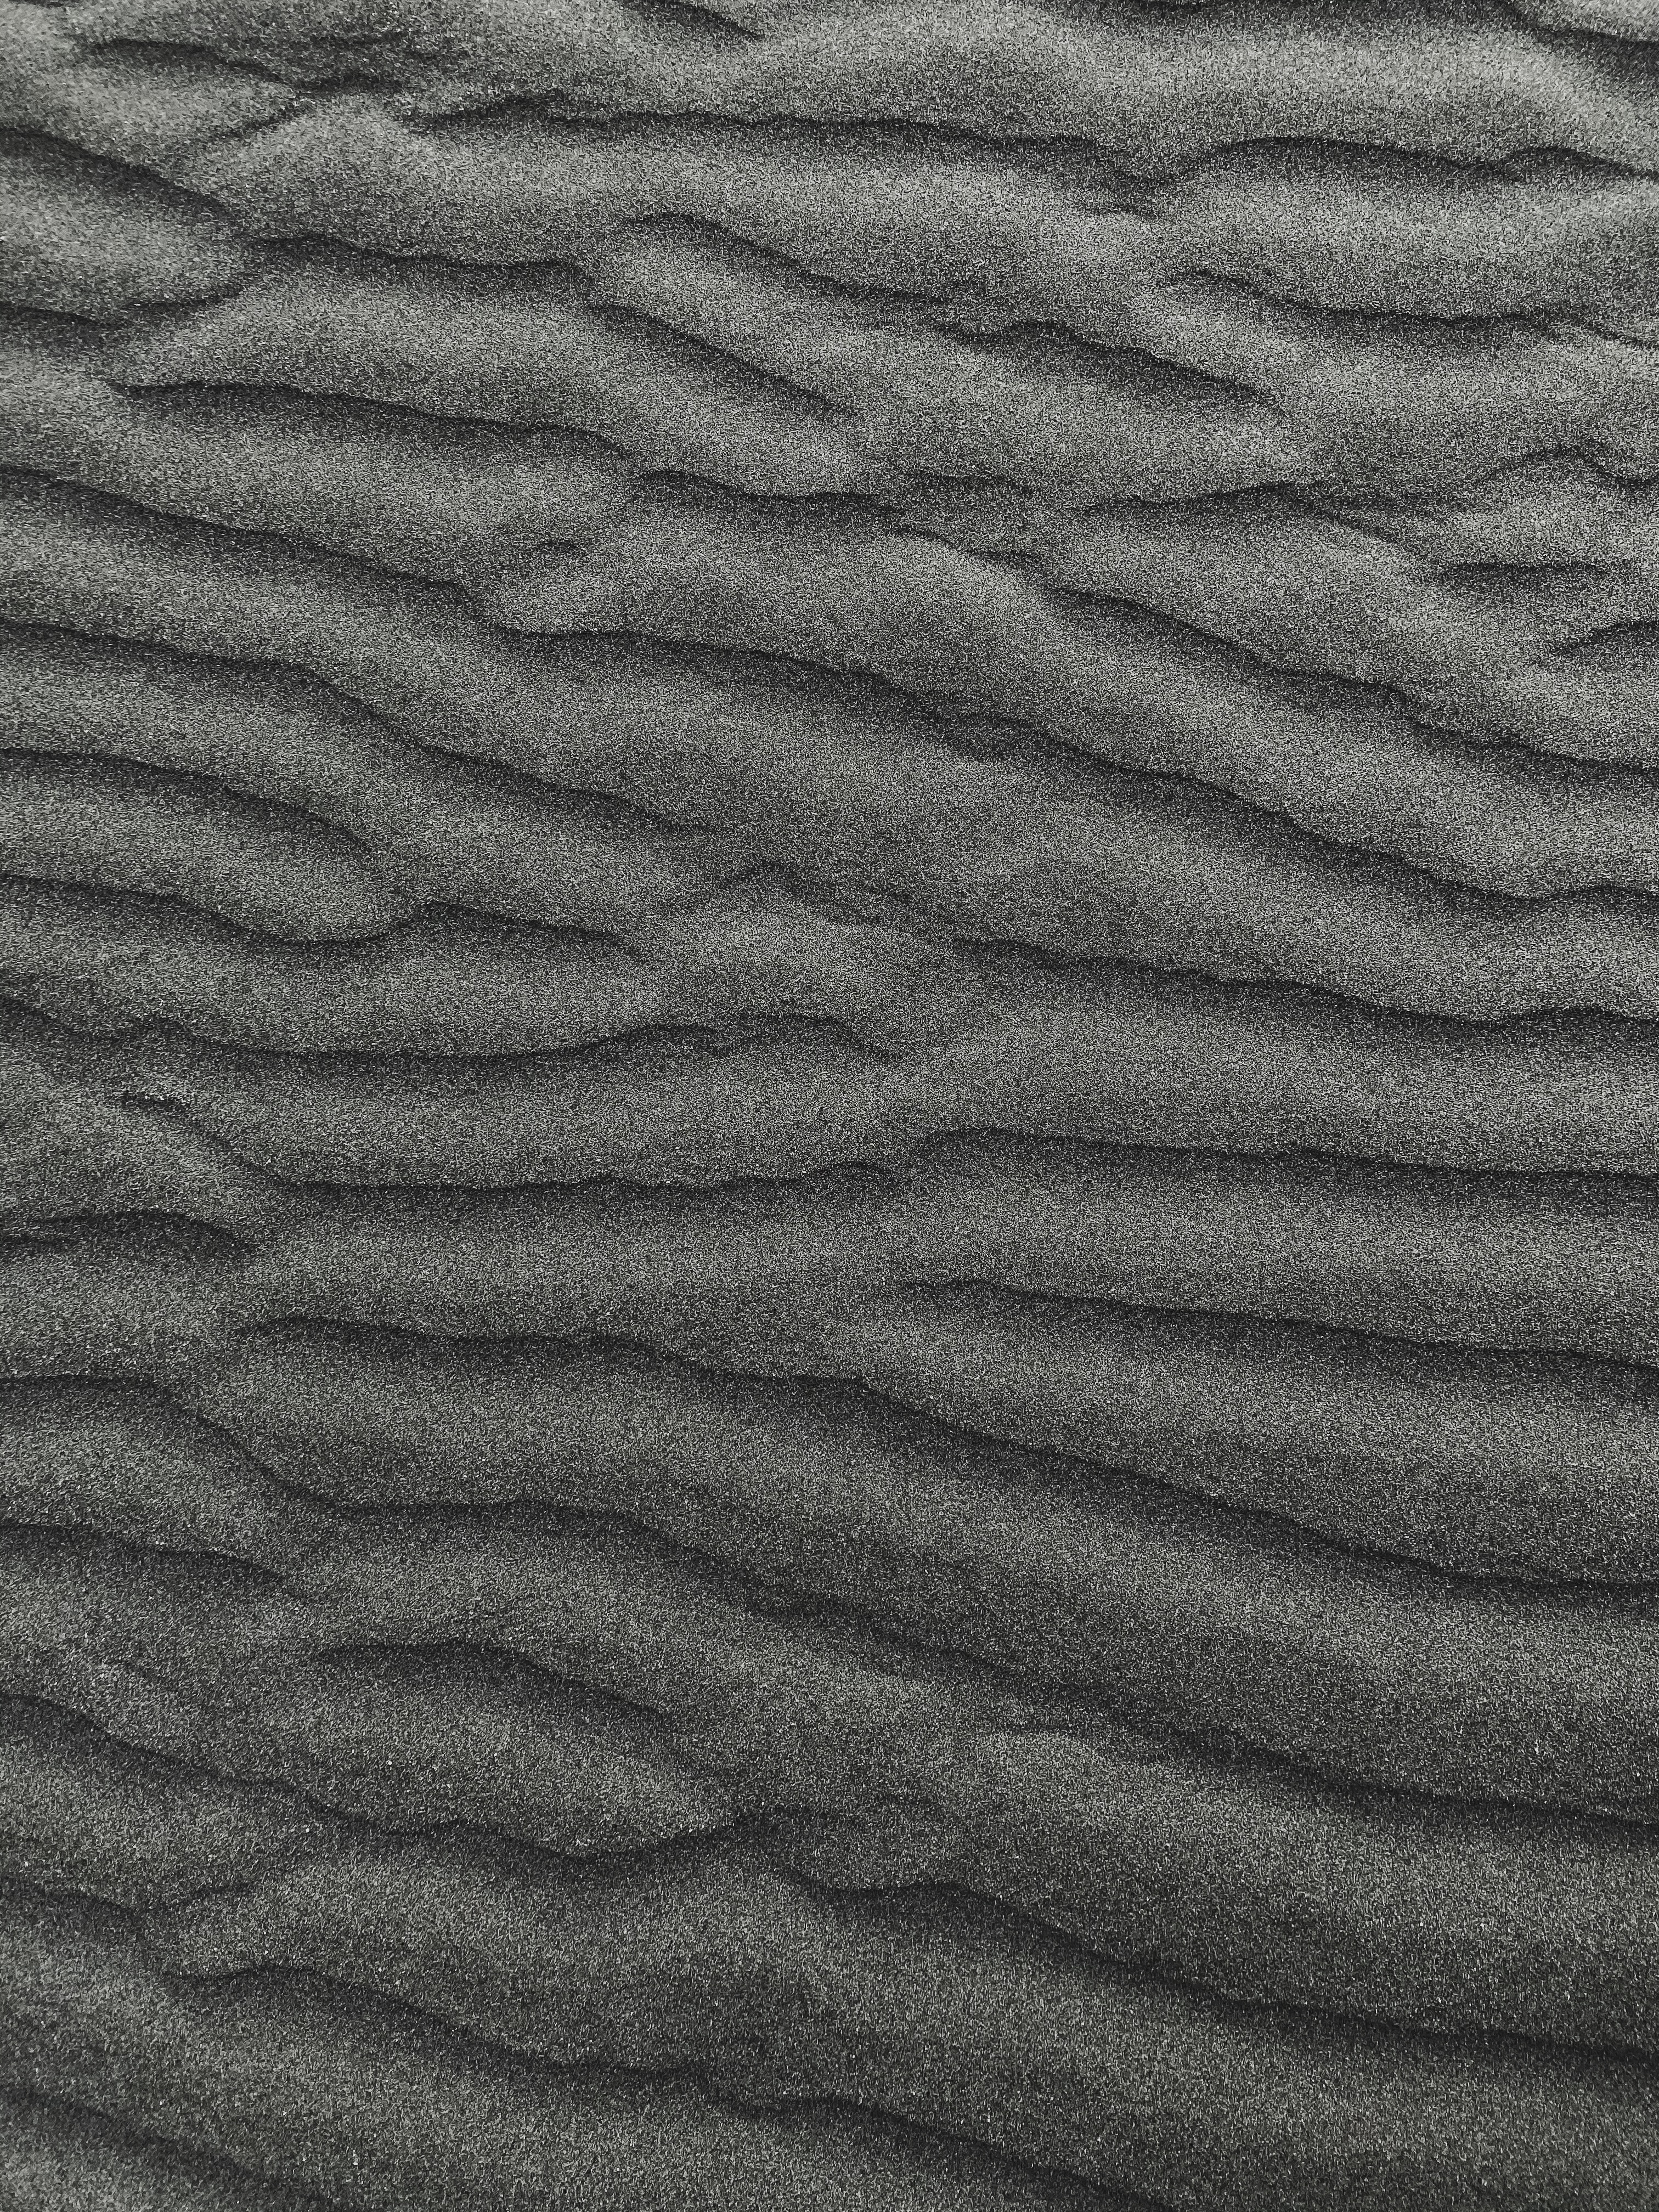 textures, wavy, sand, texture, grey phone background